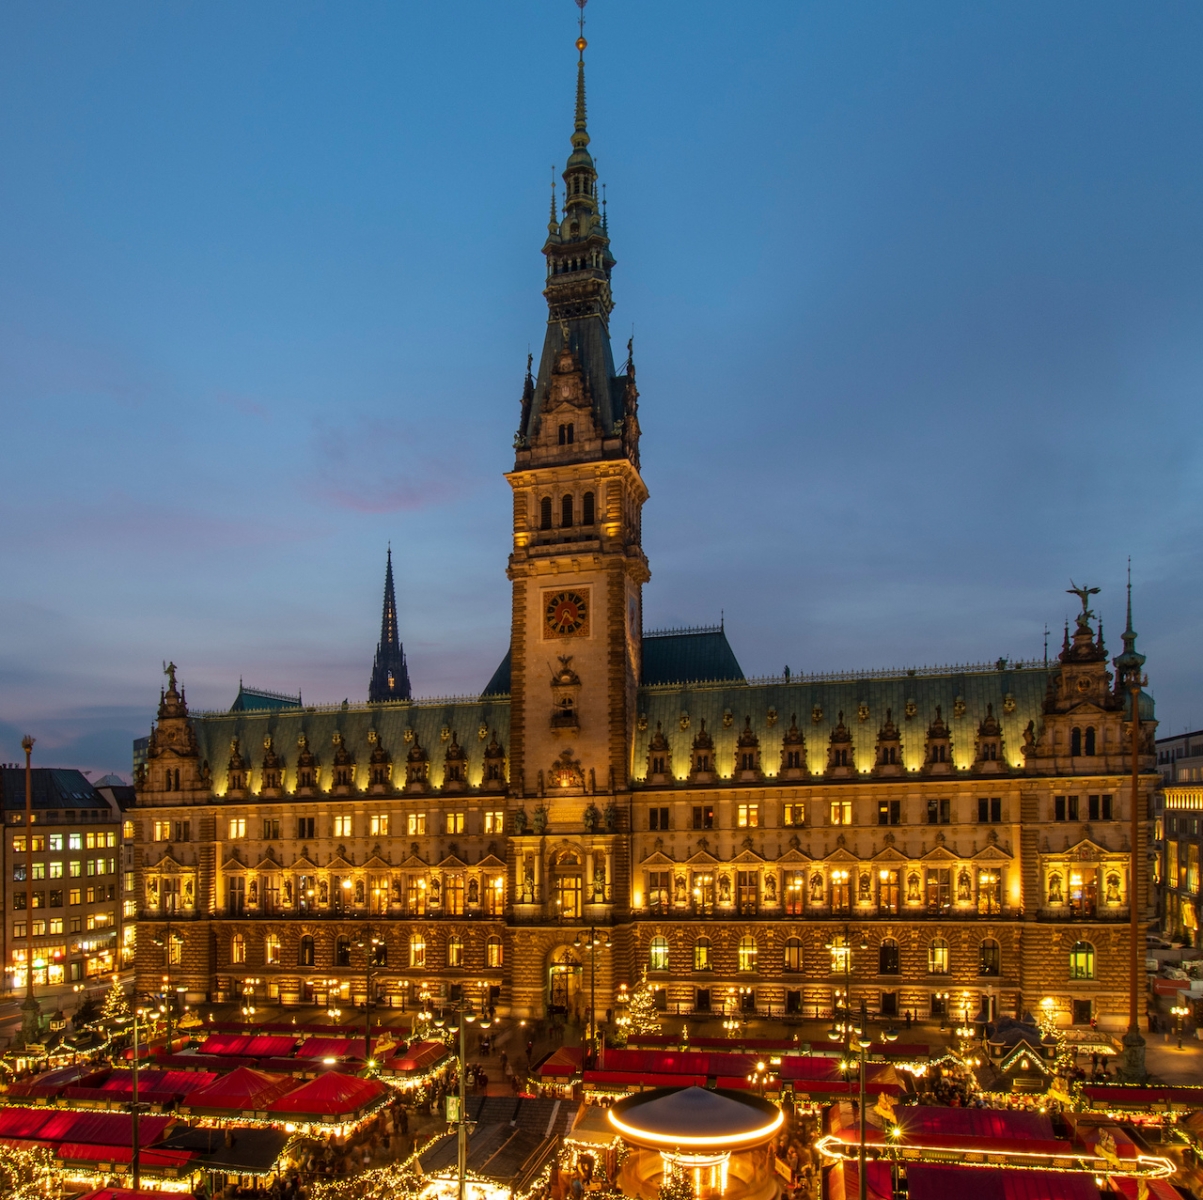 Гамбург на Рождество - Рождественский базар на ратушном рынке